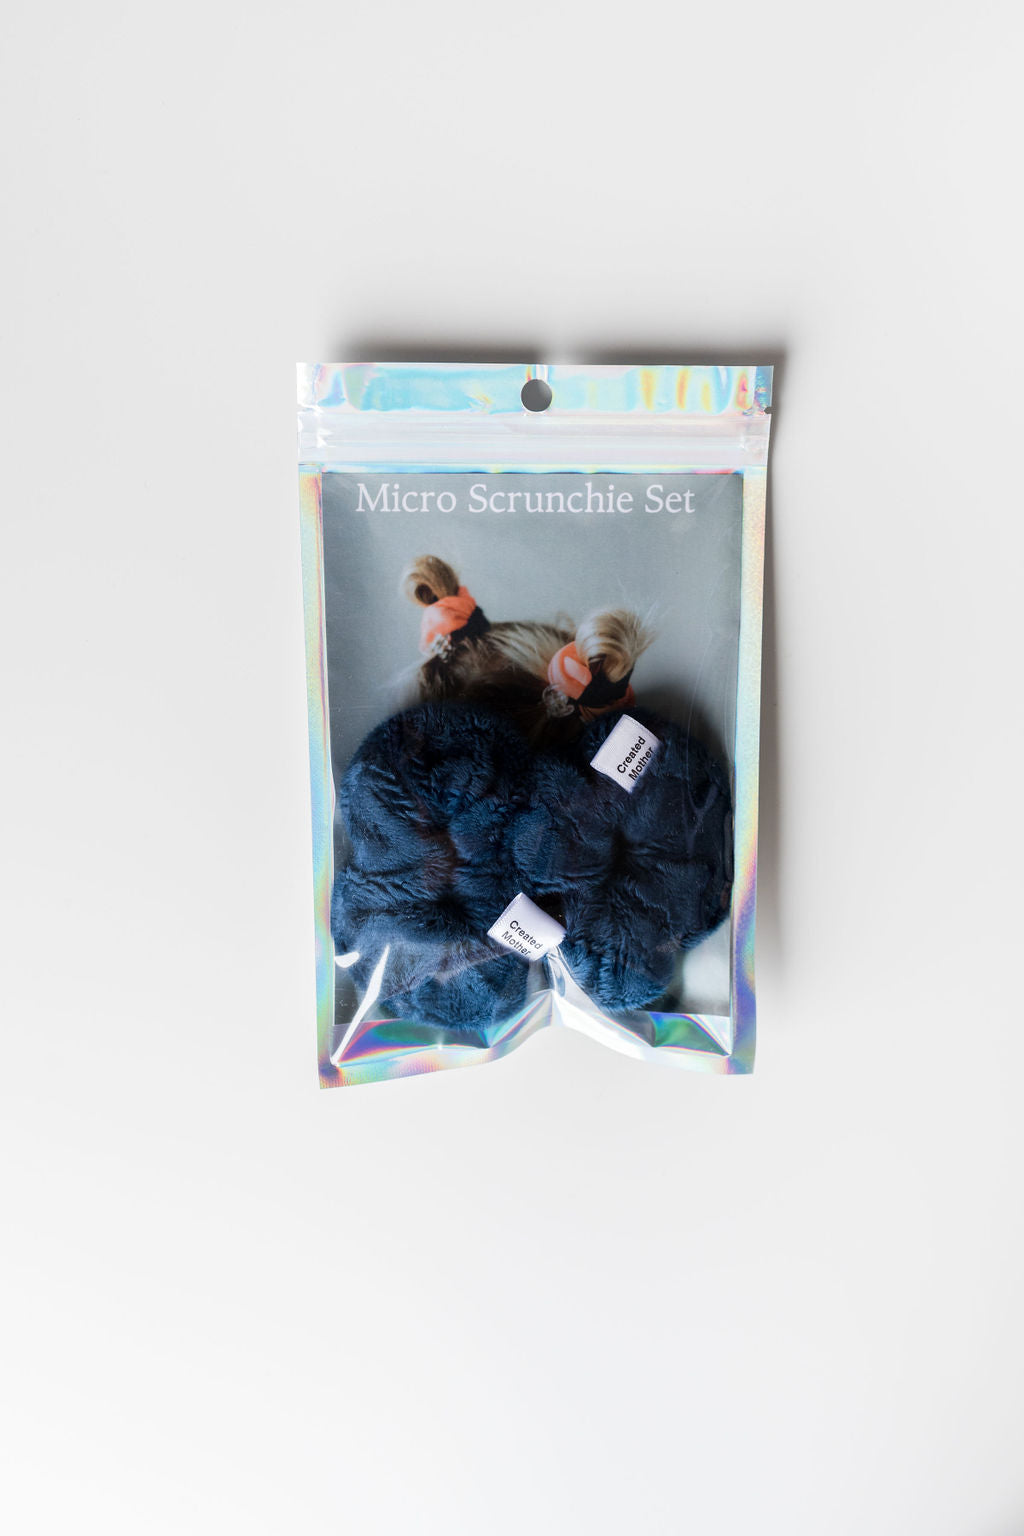 Micro Scrunchie Sets